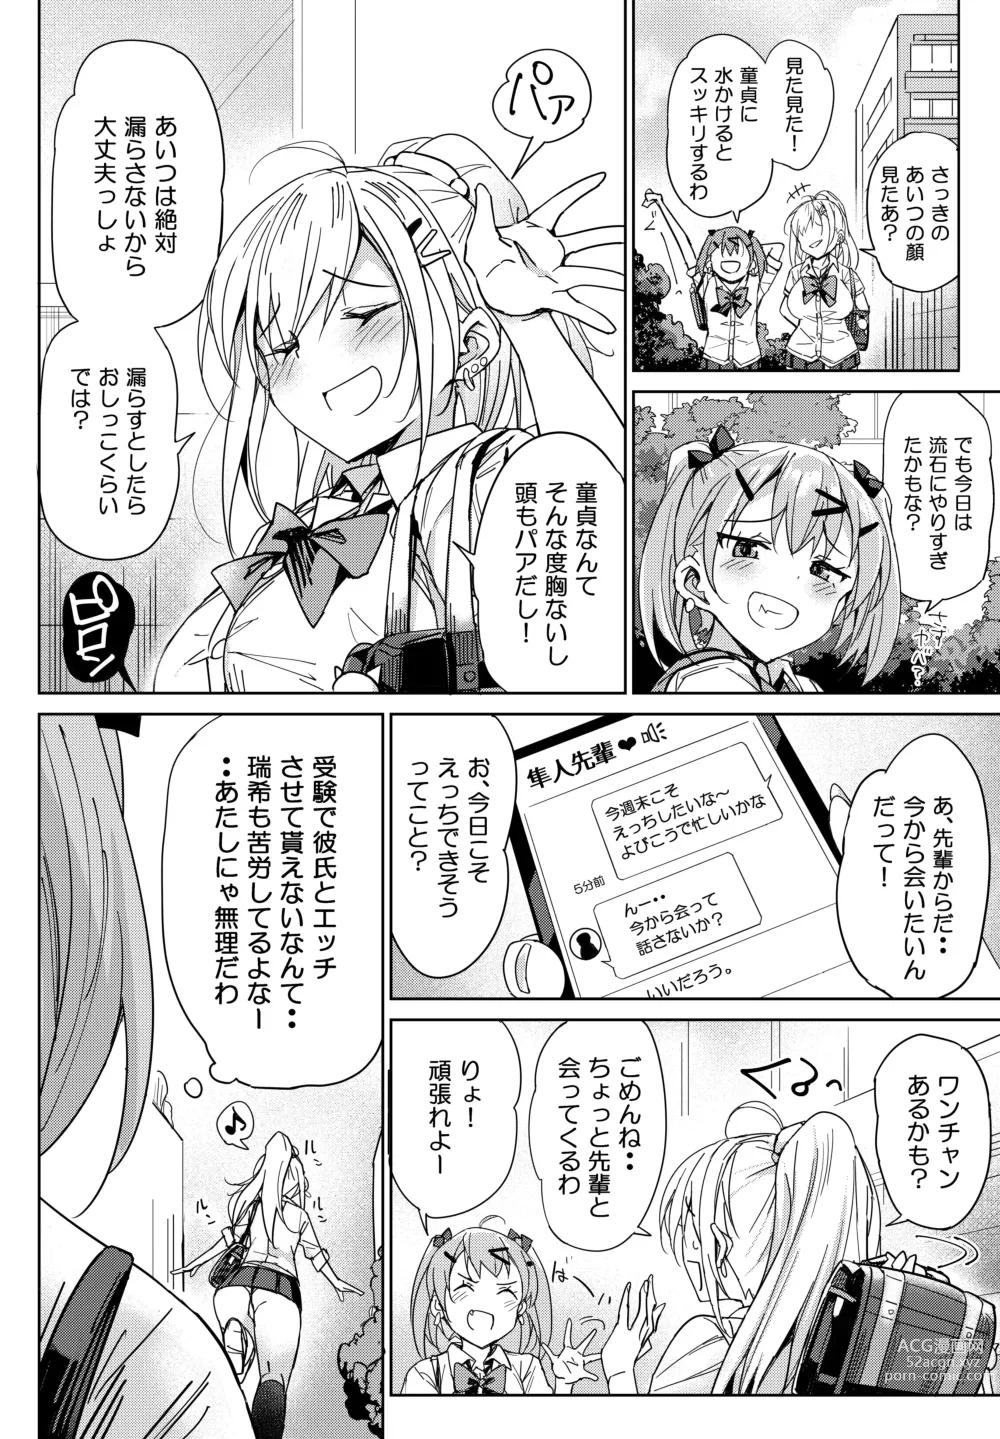 Page 3 of doujinshi Ijime musume wa Dotei o Amaku Mite Ita